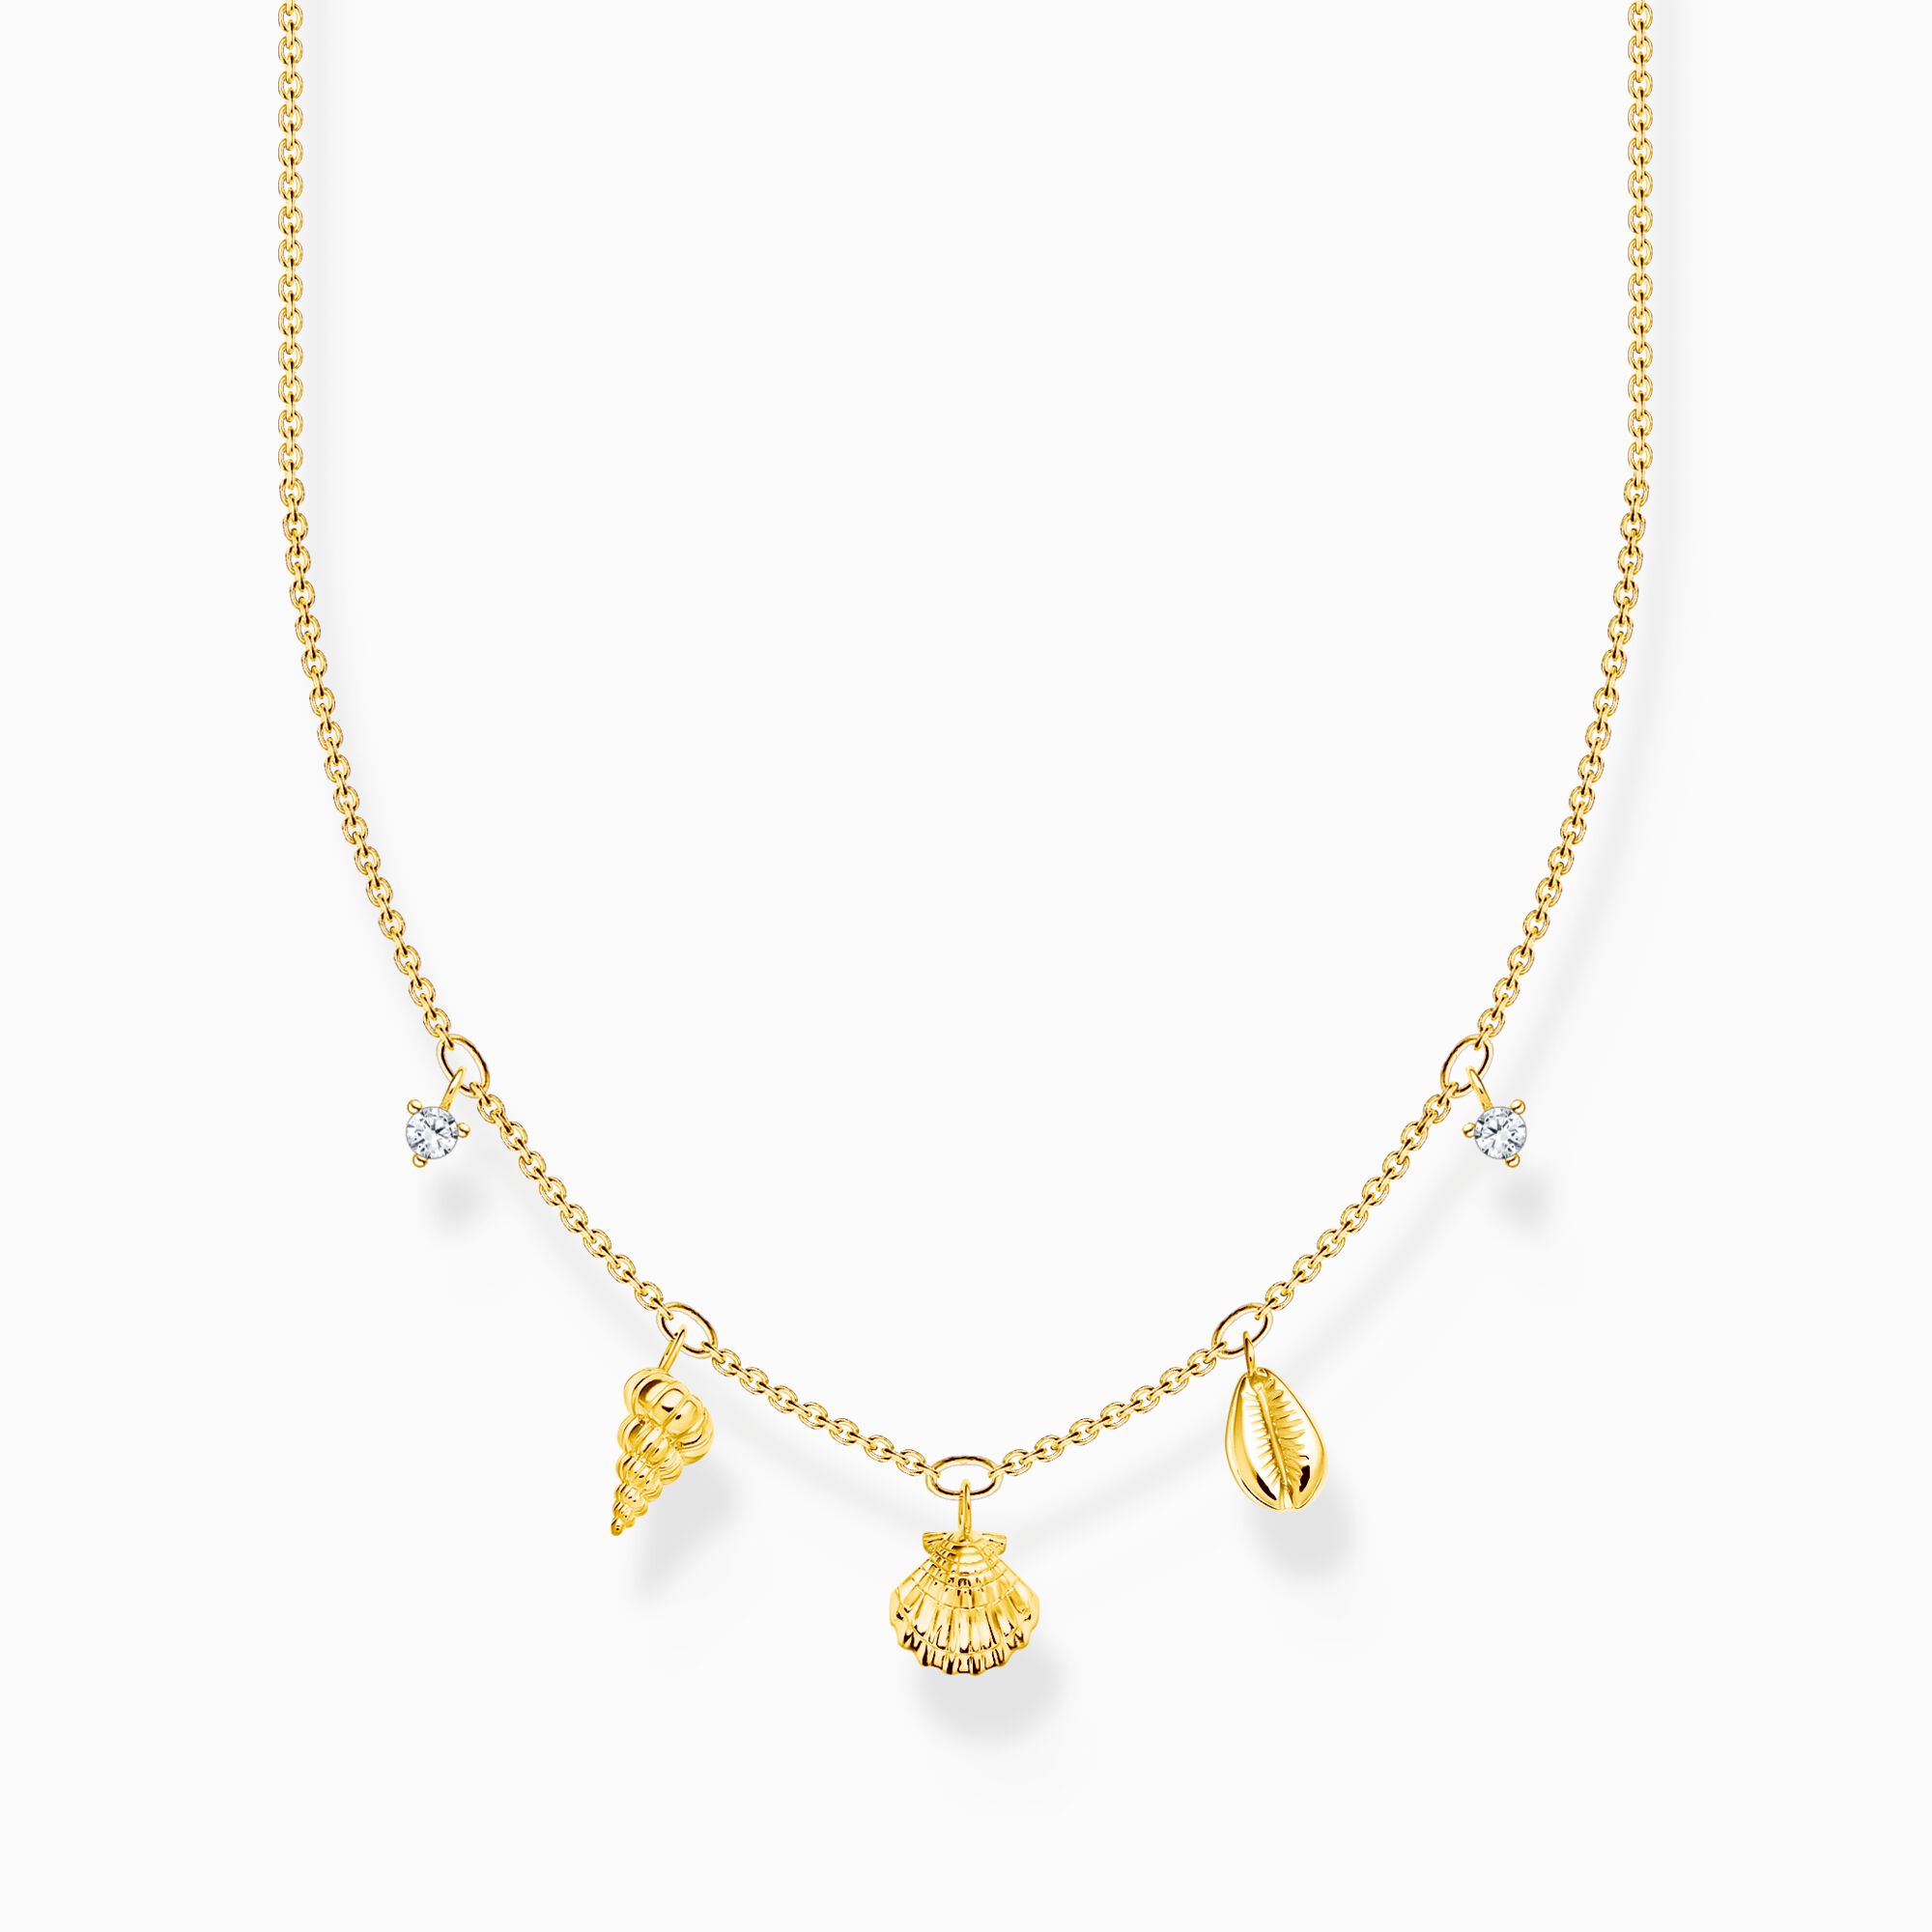 Halsband med sn&auml;ckor guld ur kollektionen Charming Collection i THOMAS SABO:s onlineshop